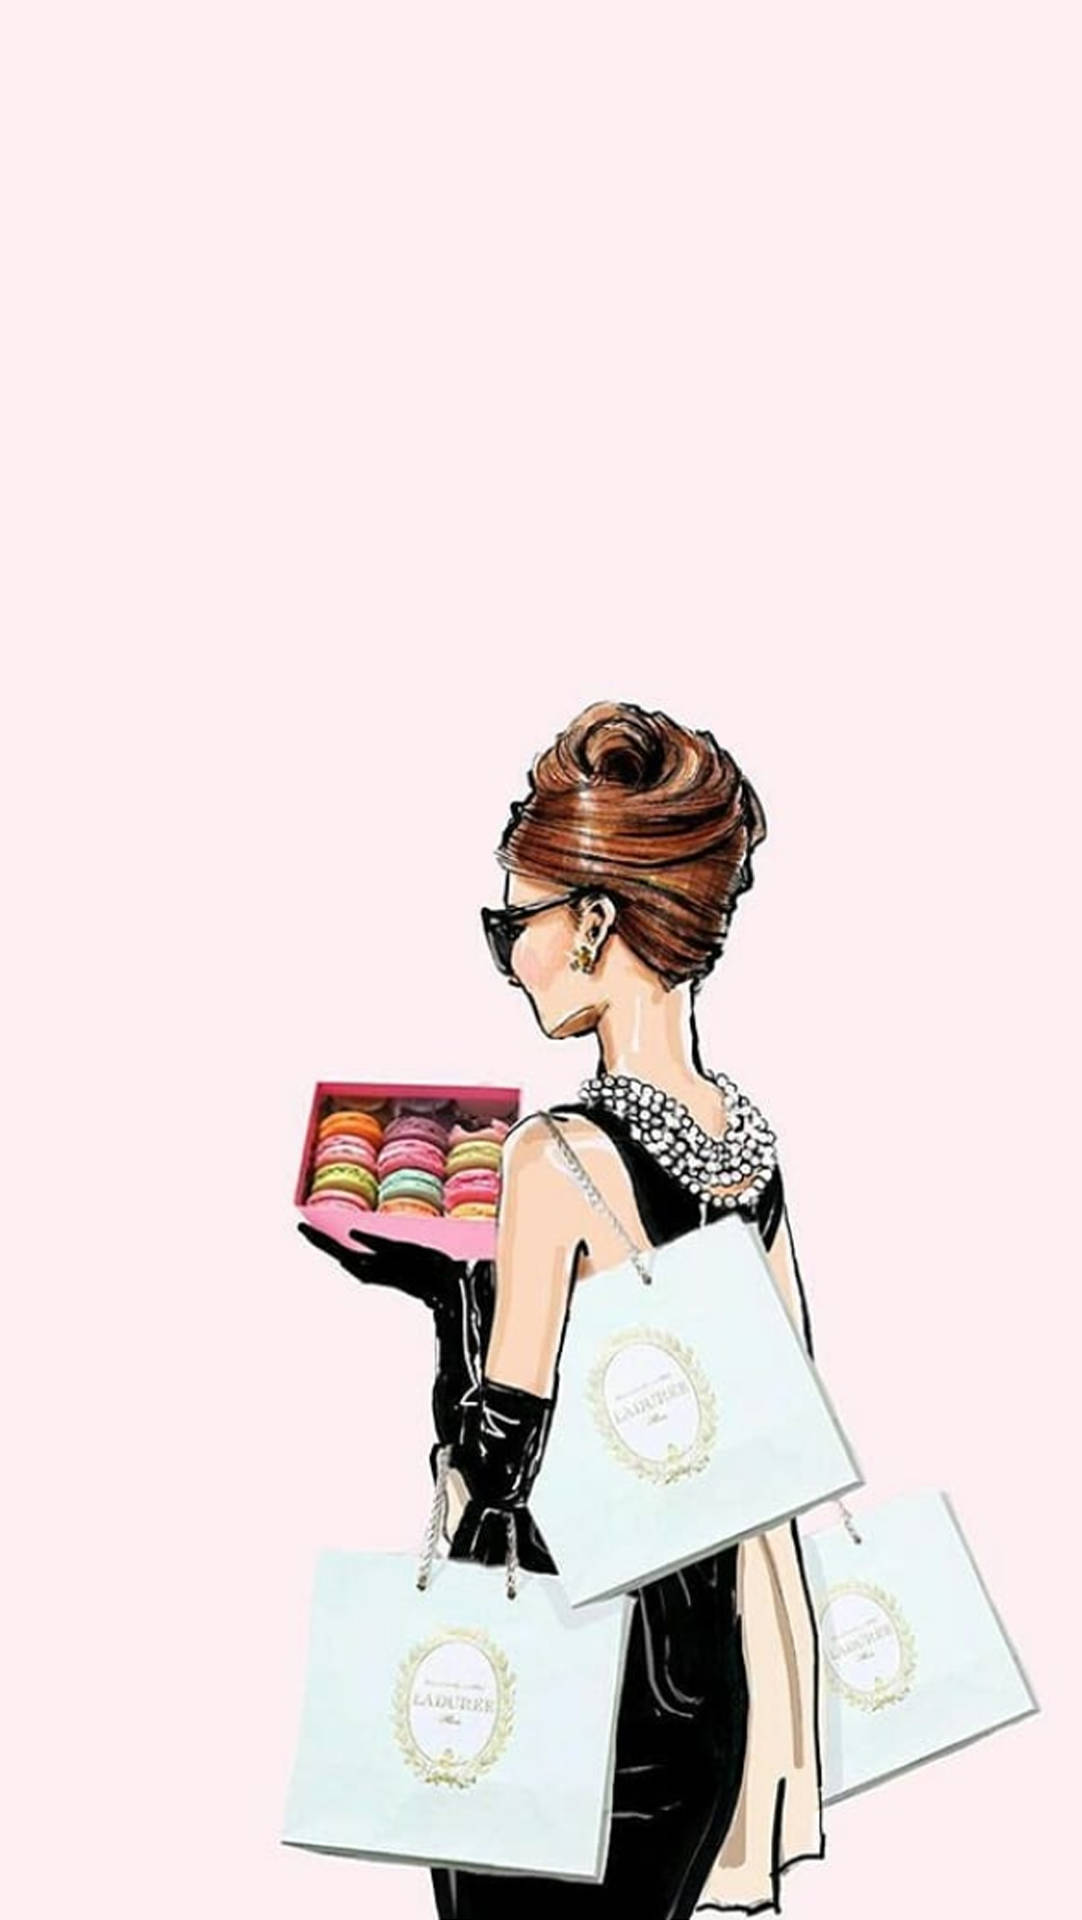 Pink Audrey Hepburn fashion art phone wallpaper.